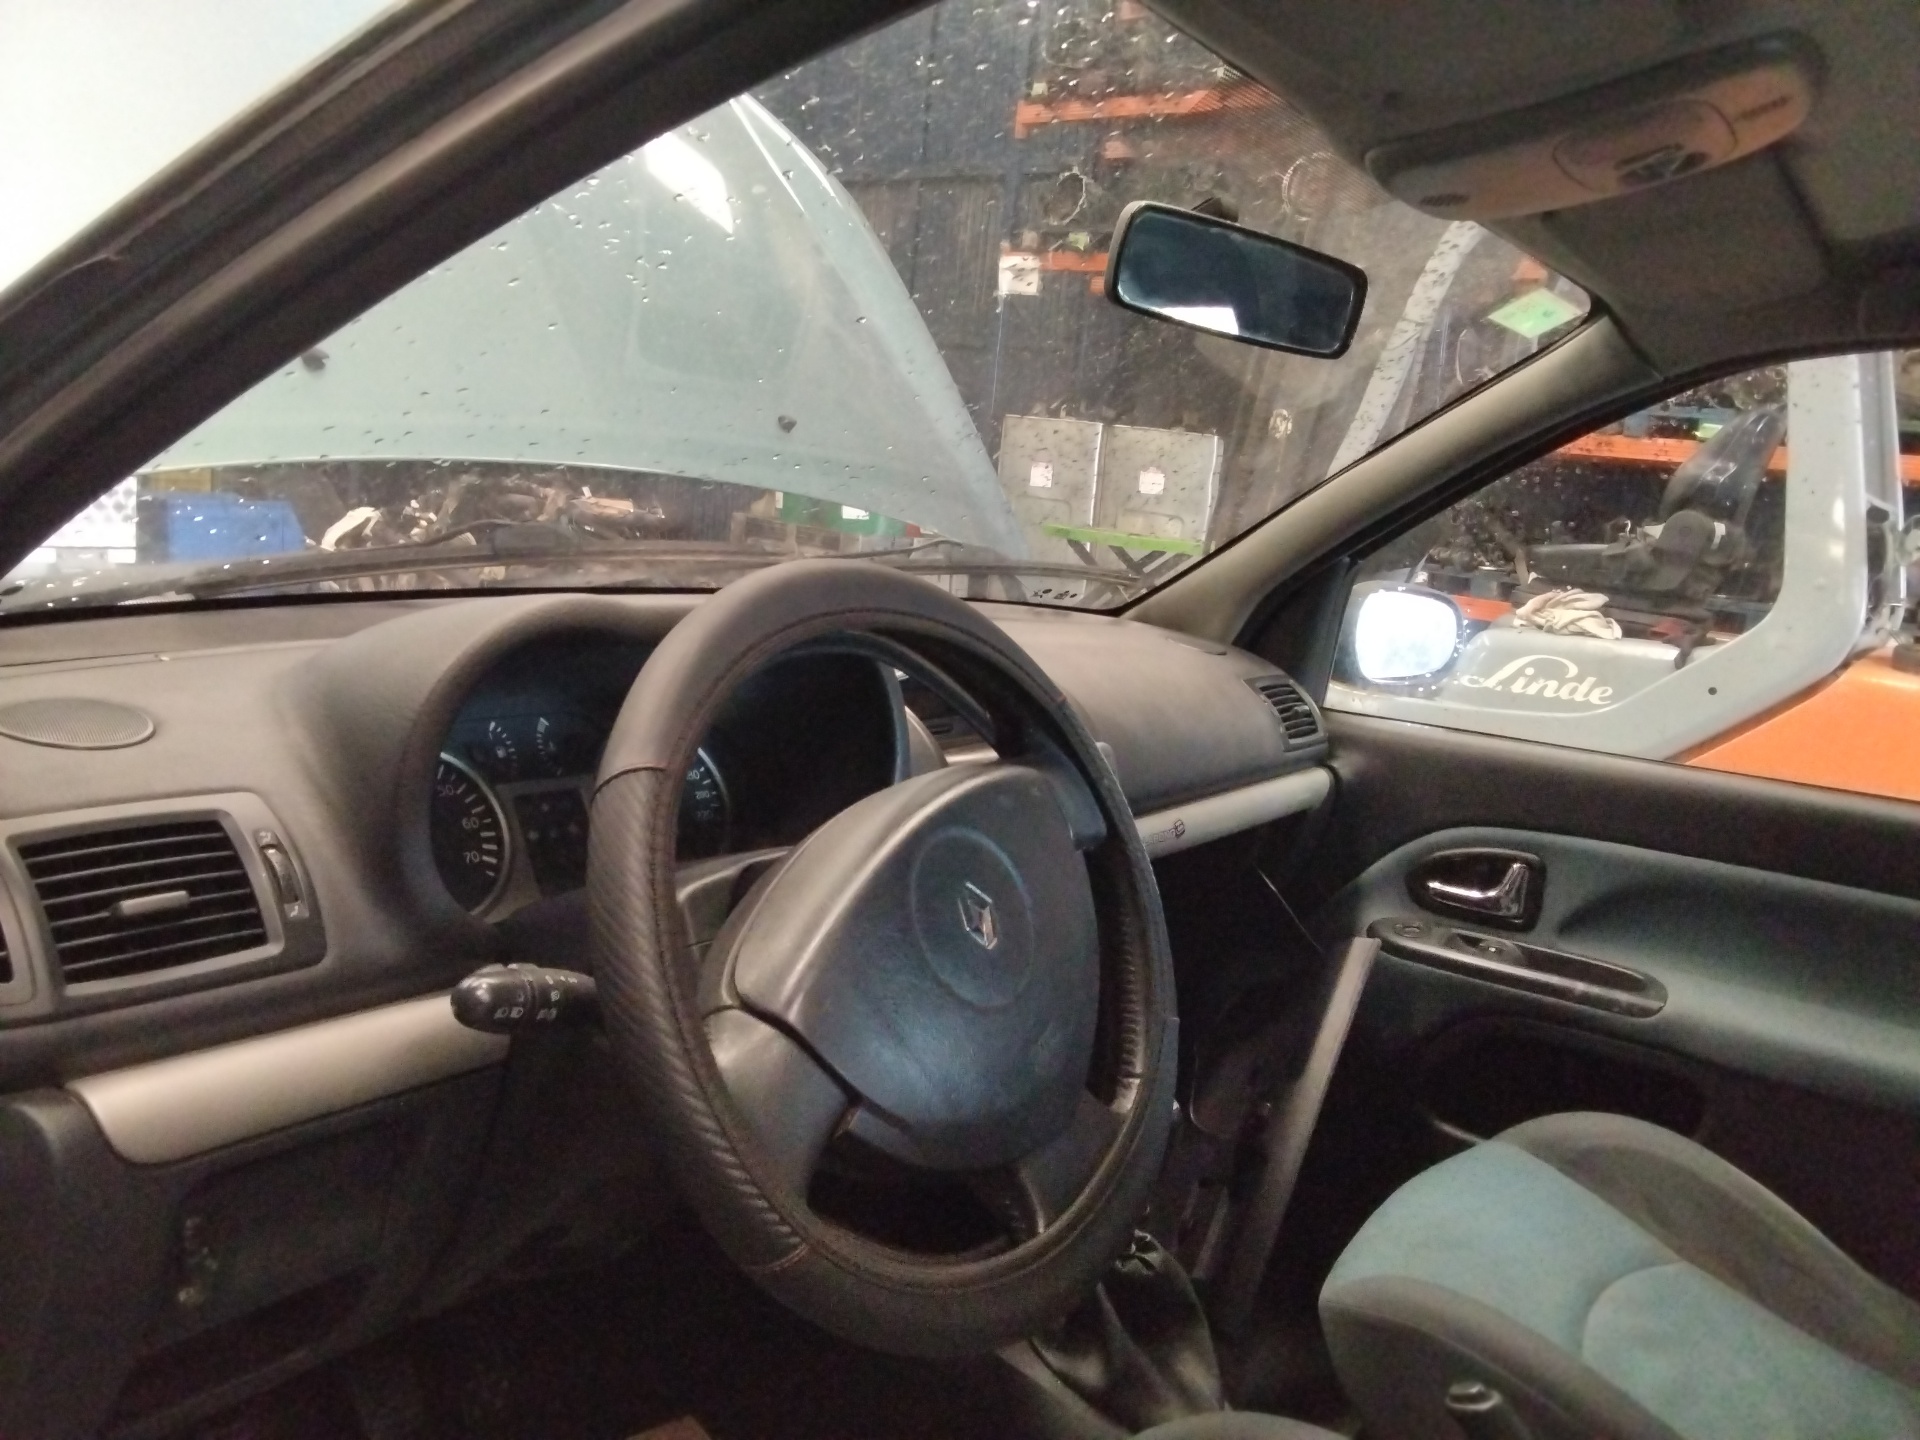 RENAULT Clio 3 generation (2005-2012) Фонарь задний левый 8200071413 25187356